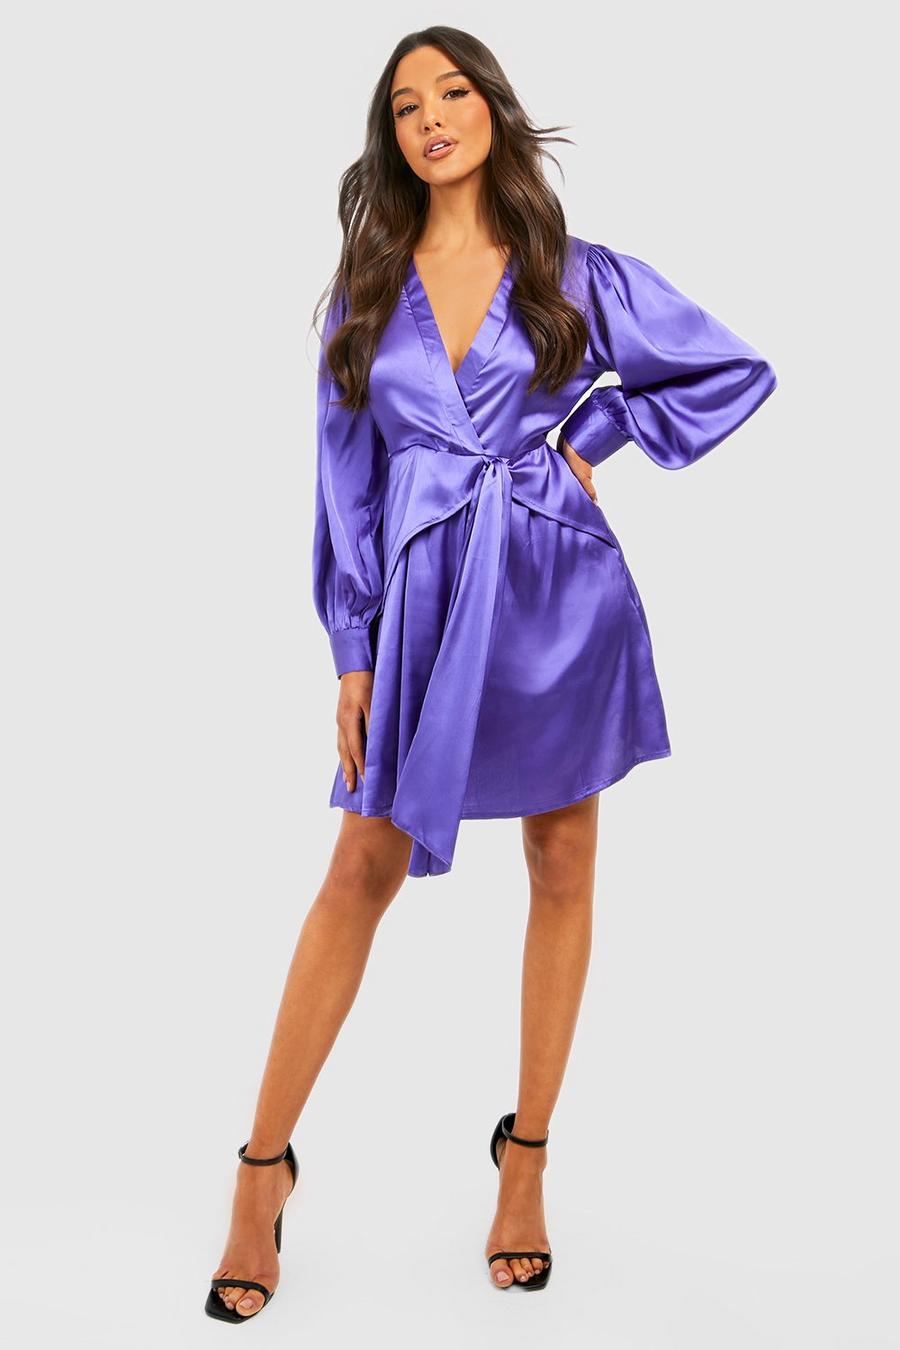 Jewel purple The Skater Dress